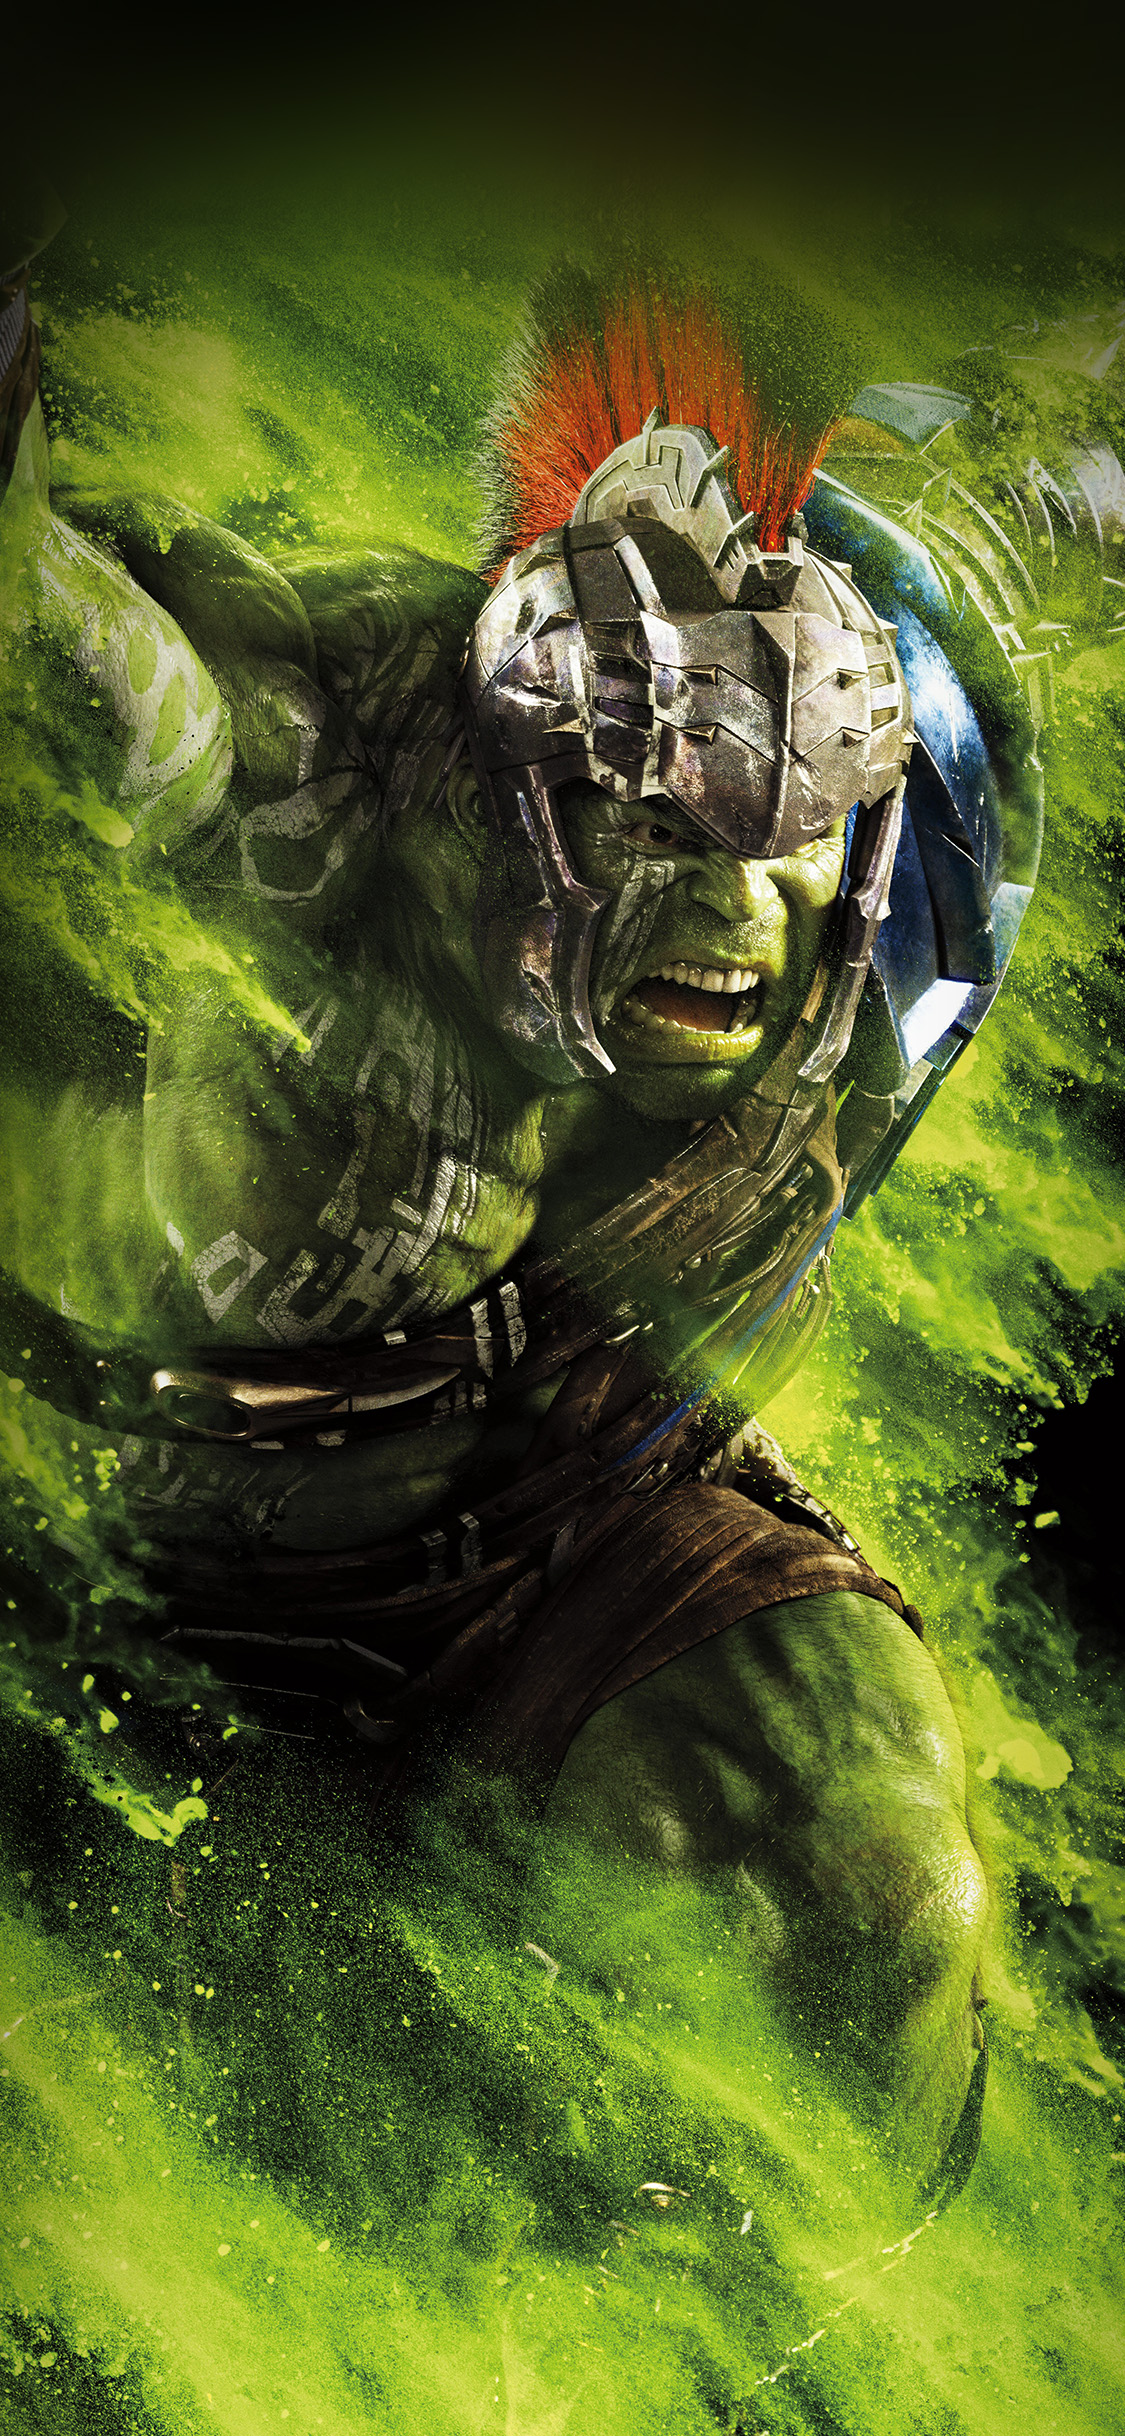 hulk iphone wallpaper,fictional character,hulk,cg artwork,illustration,art